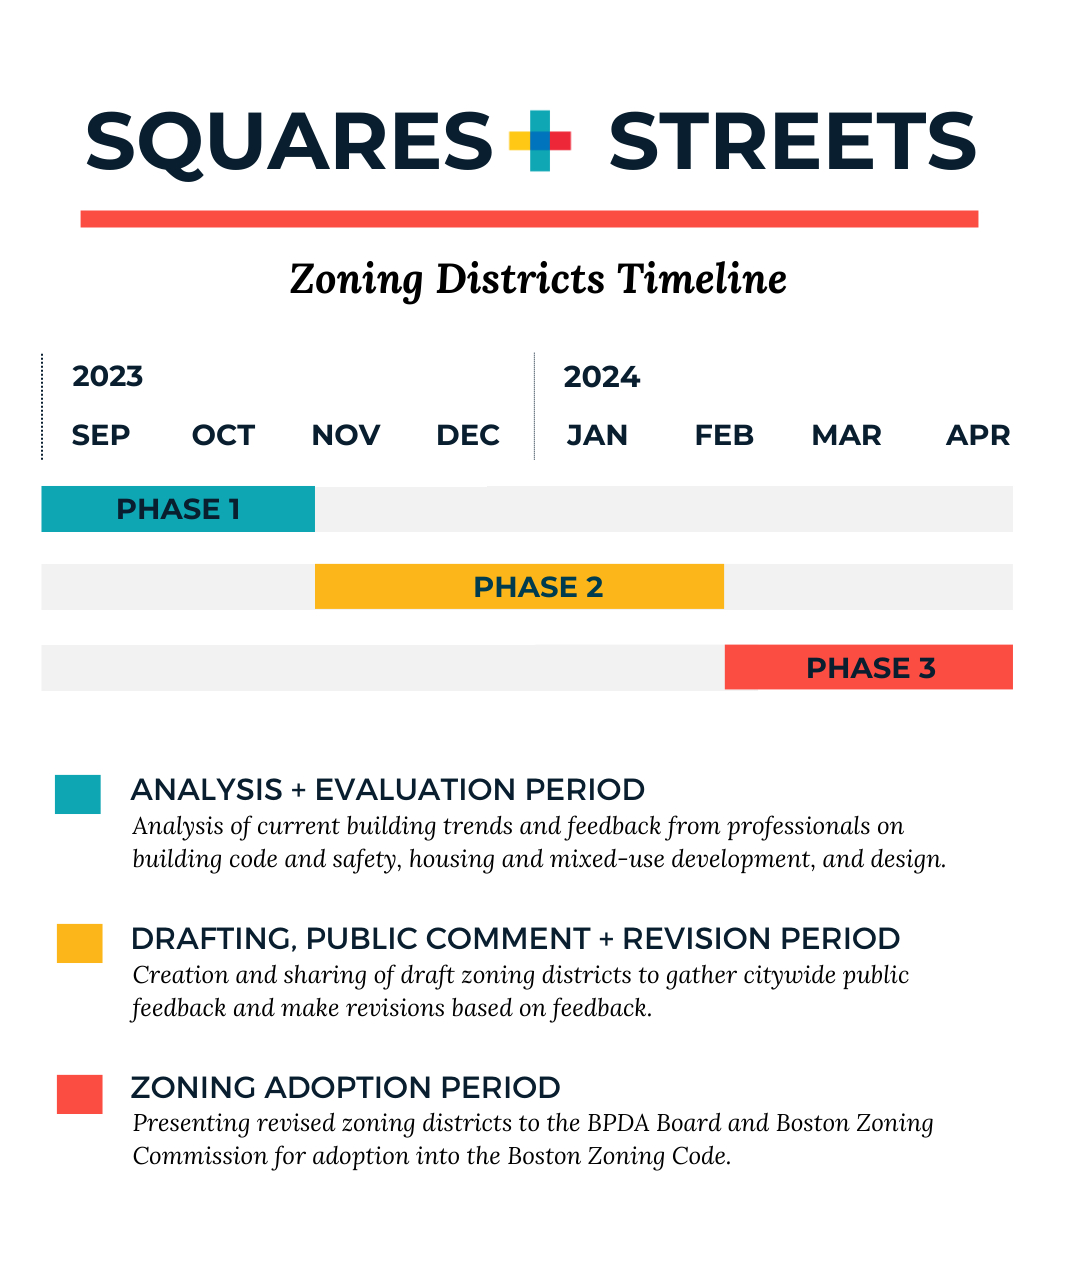 Zoning analysis, drafting, and adoption timeline graphic